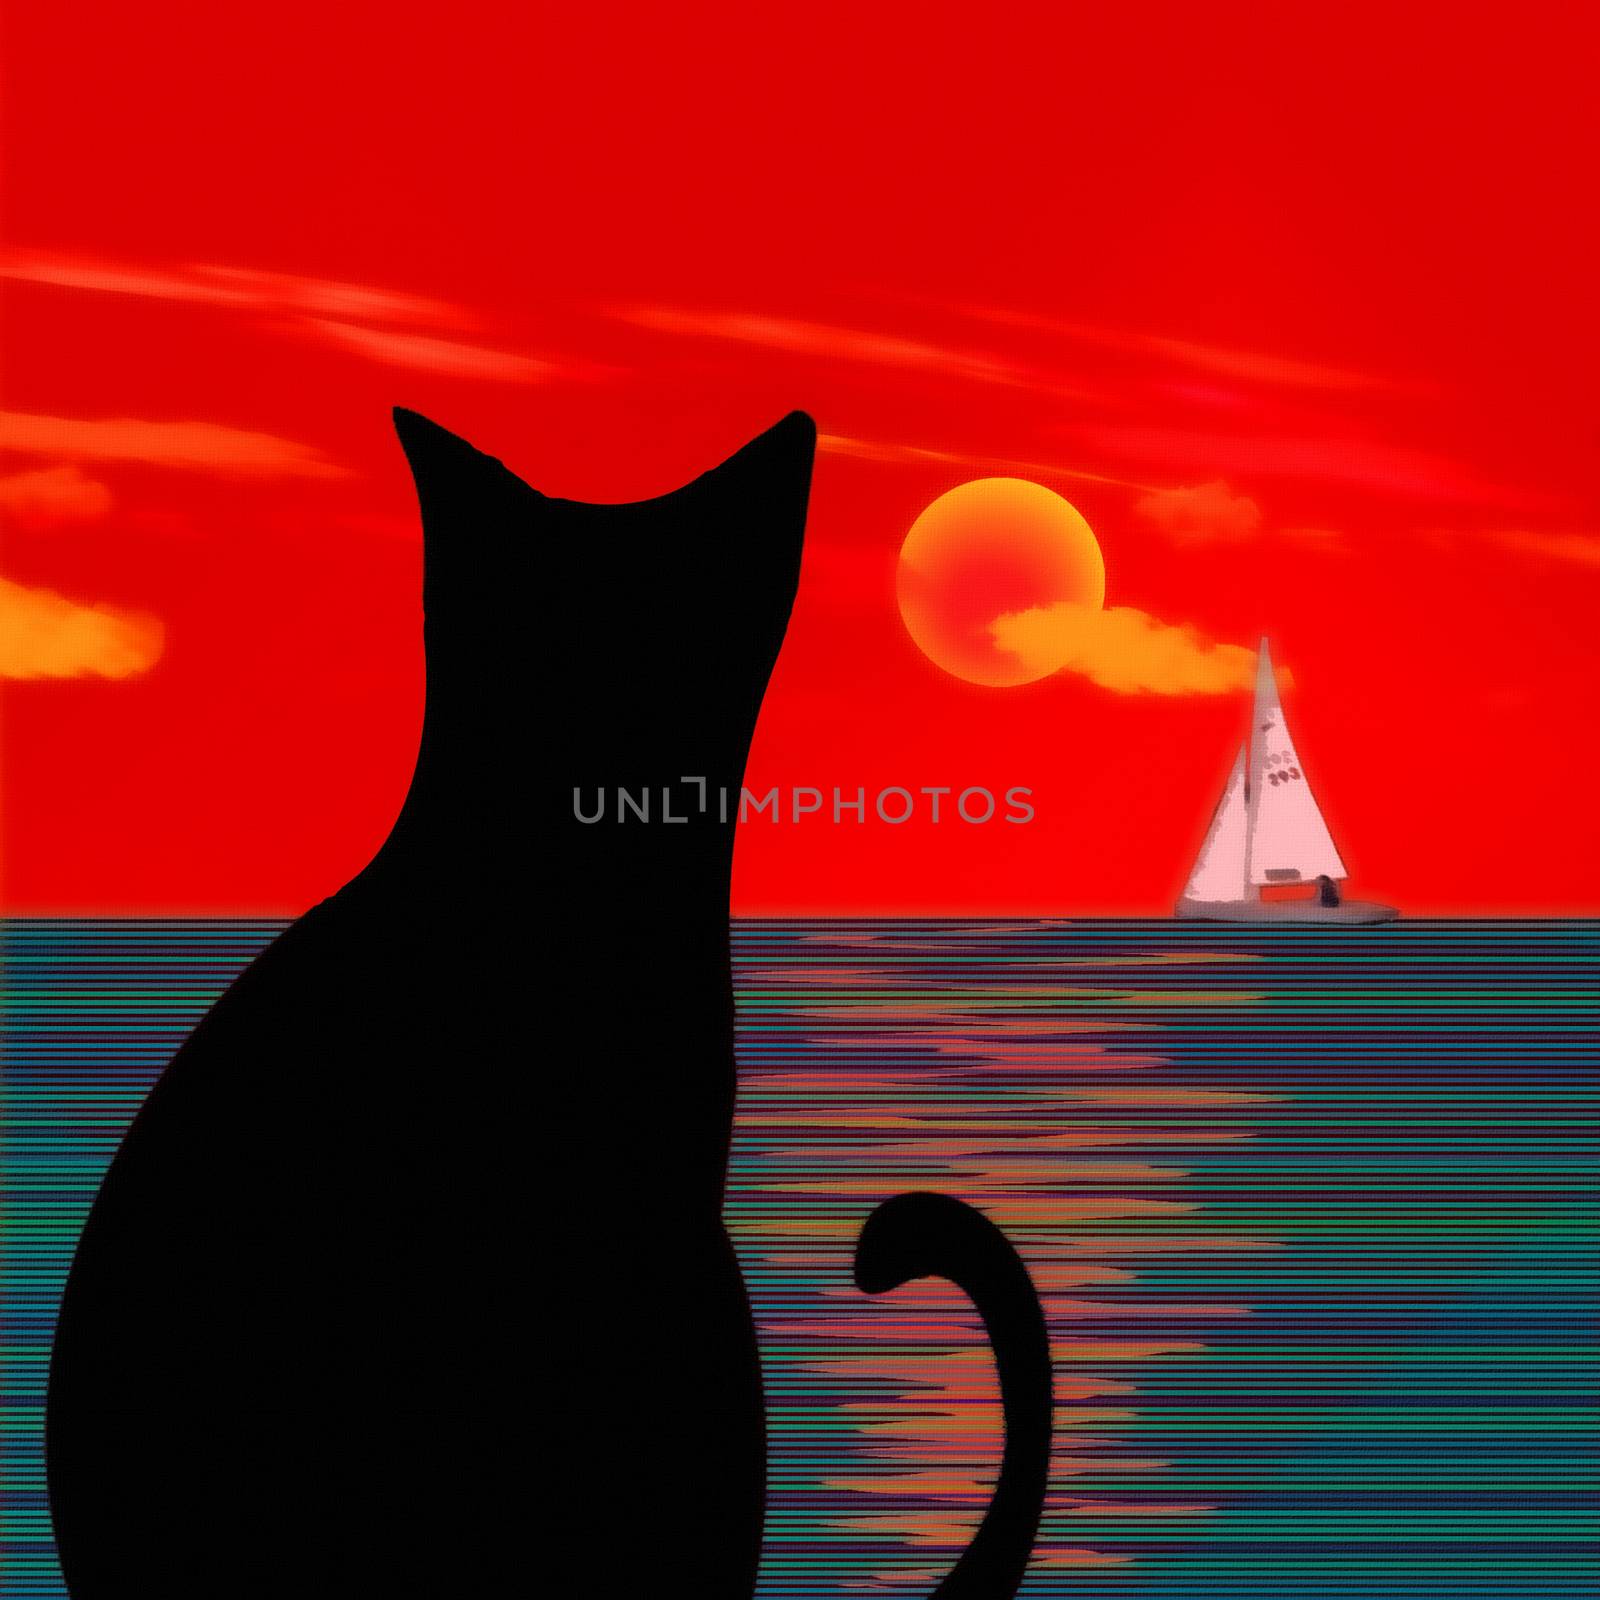 Black cat, sailboat and seascape